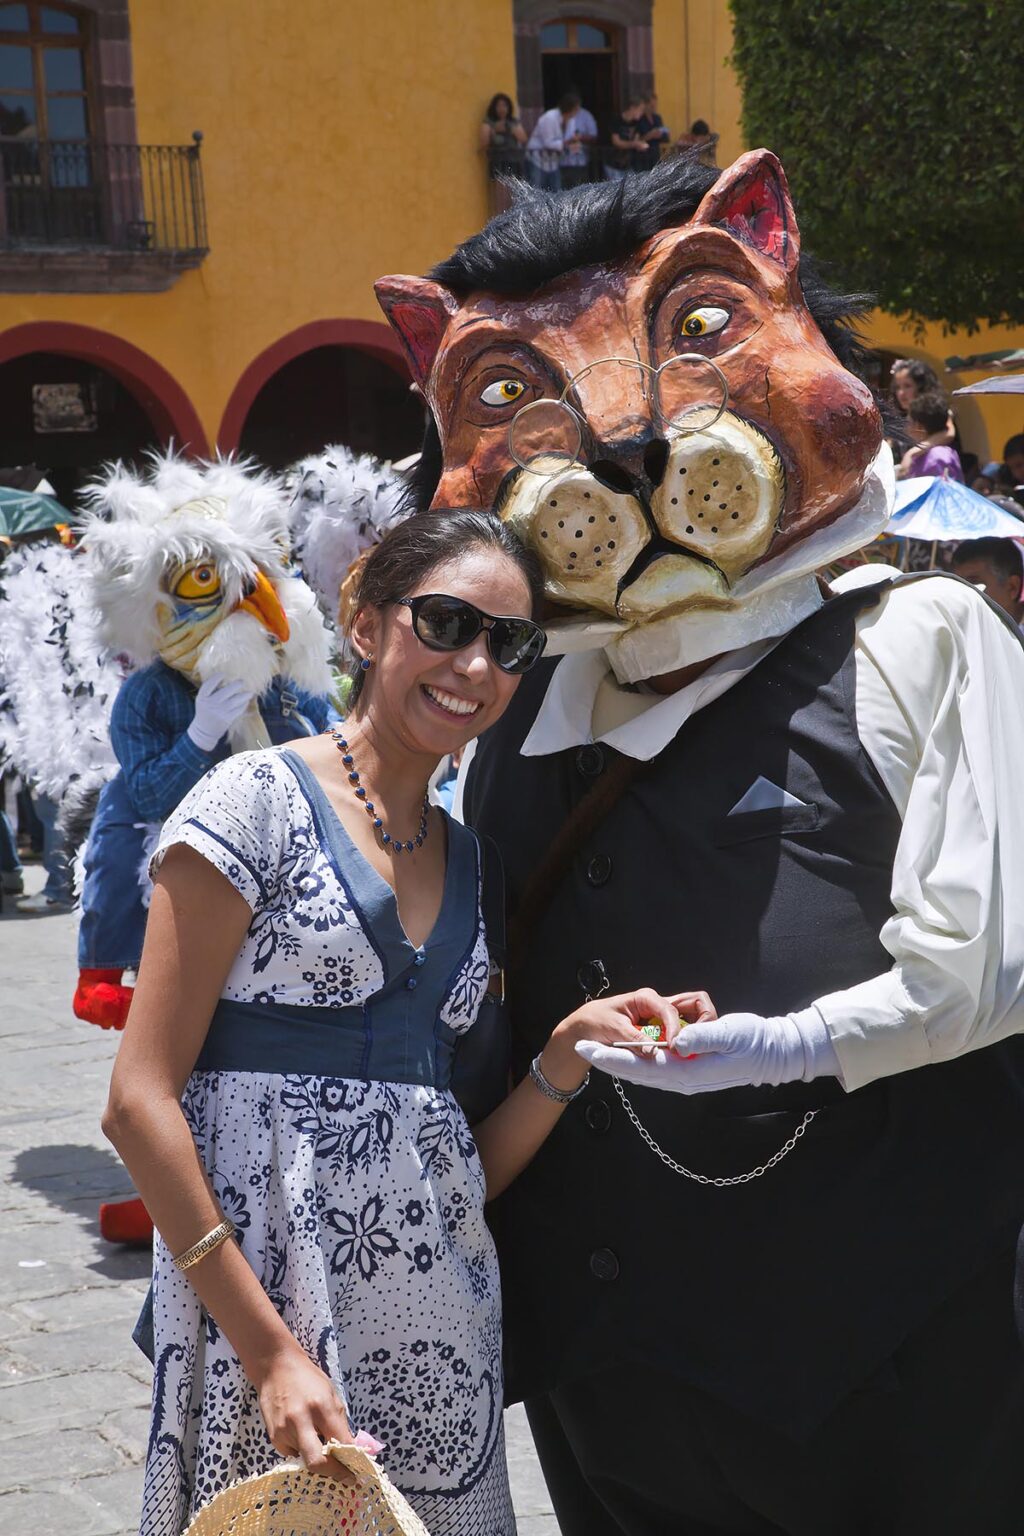 Mexicans dress in costumes and participate the DIA DE LOS LOCOS (DAY OF THE CRAZIES) PARADE - SAN MIGUEL DE ALLENDE,  GUANAJUATO, MEXICO